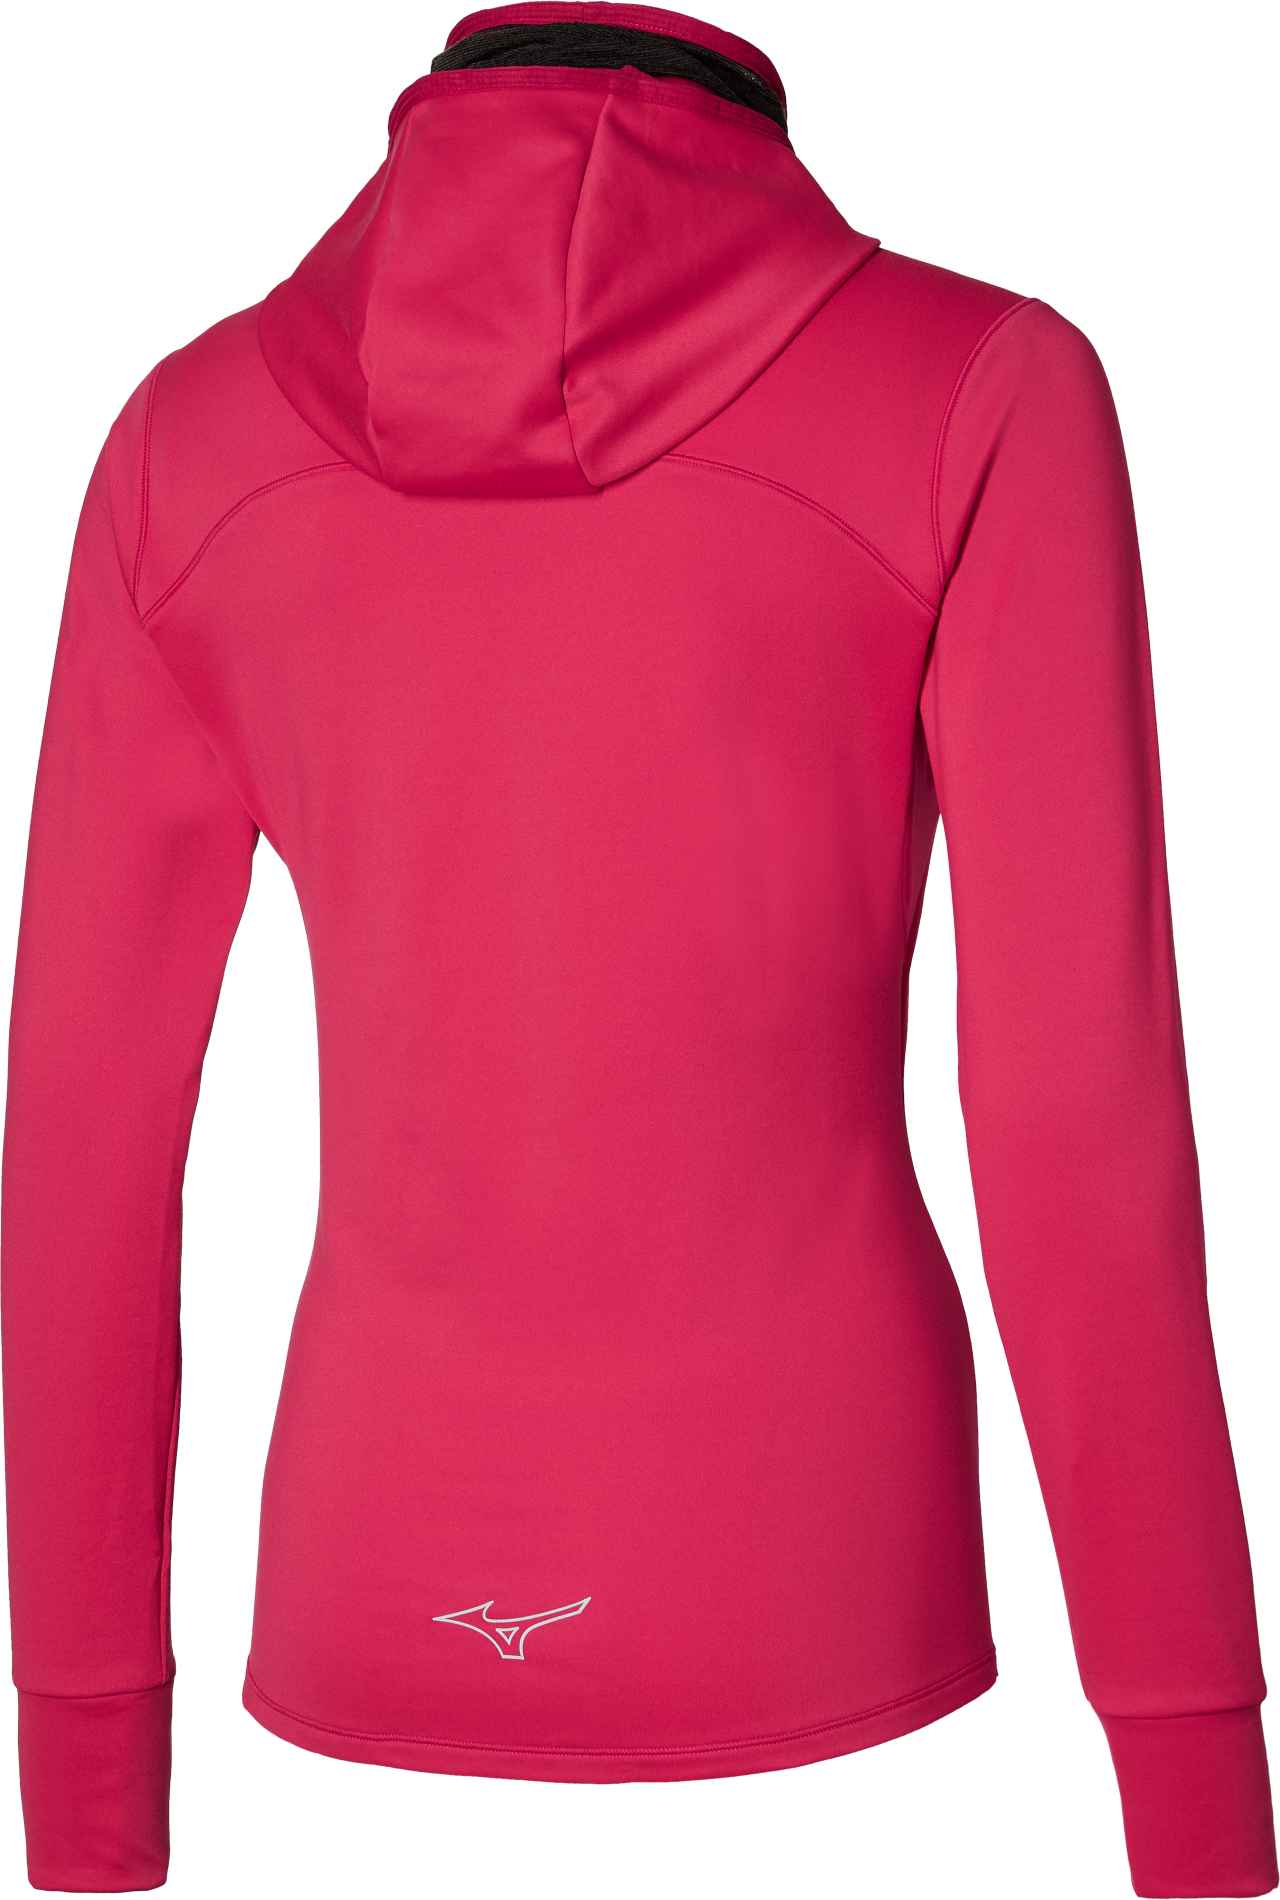 Women’s insulated sweatshirt with long sleeves